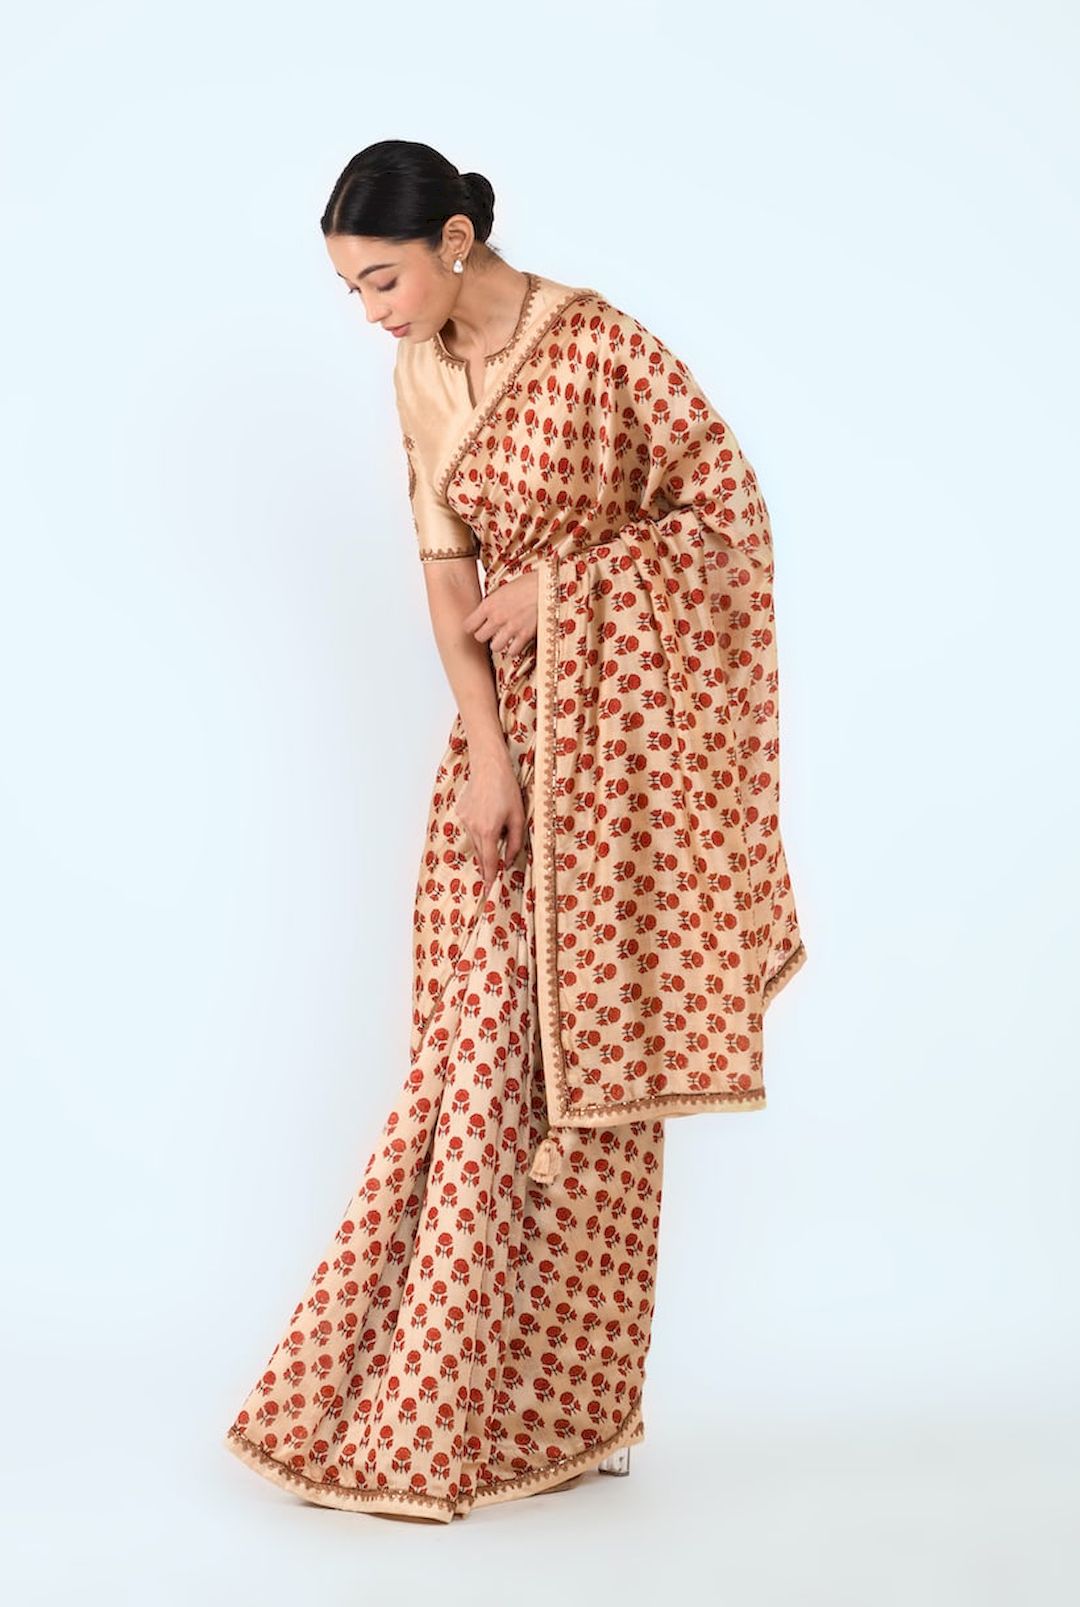 Printed Silk Sari With Blouse. (Beige Printed) - Prashant Chouhan